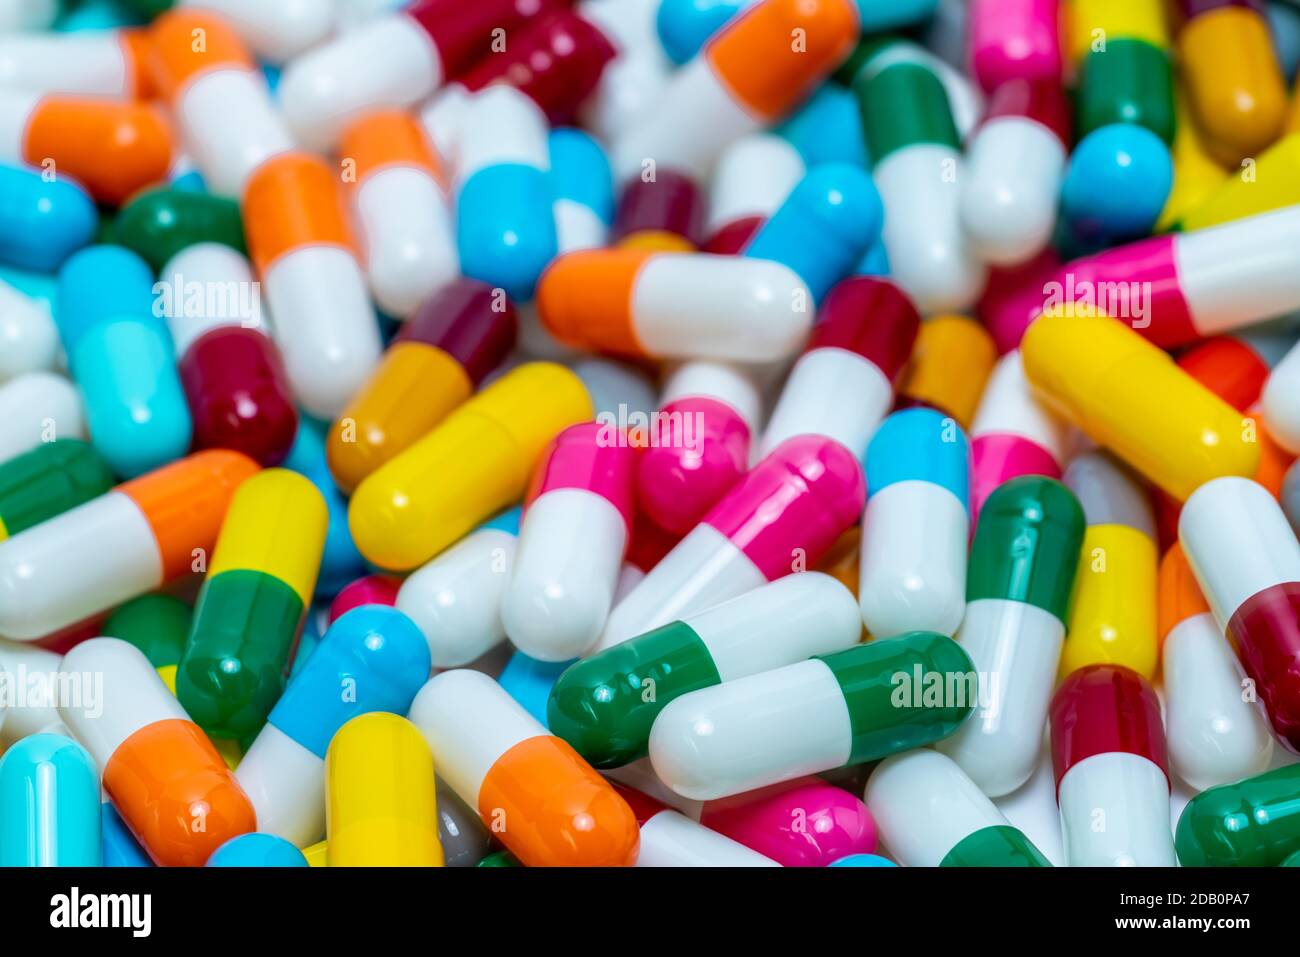 Selective focus on antibiotic capsule pills. Antibiotic drug resistance. Pile of bright colors capsule pills. Pharmaceutical industry. Pharmaceutical Stock Photo